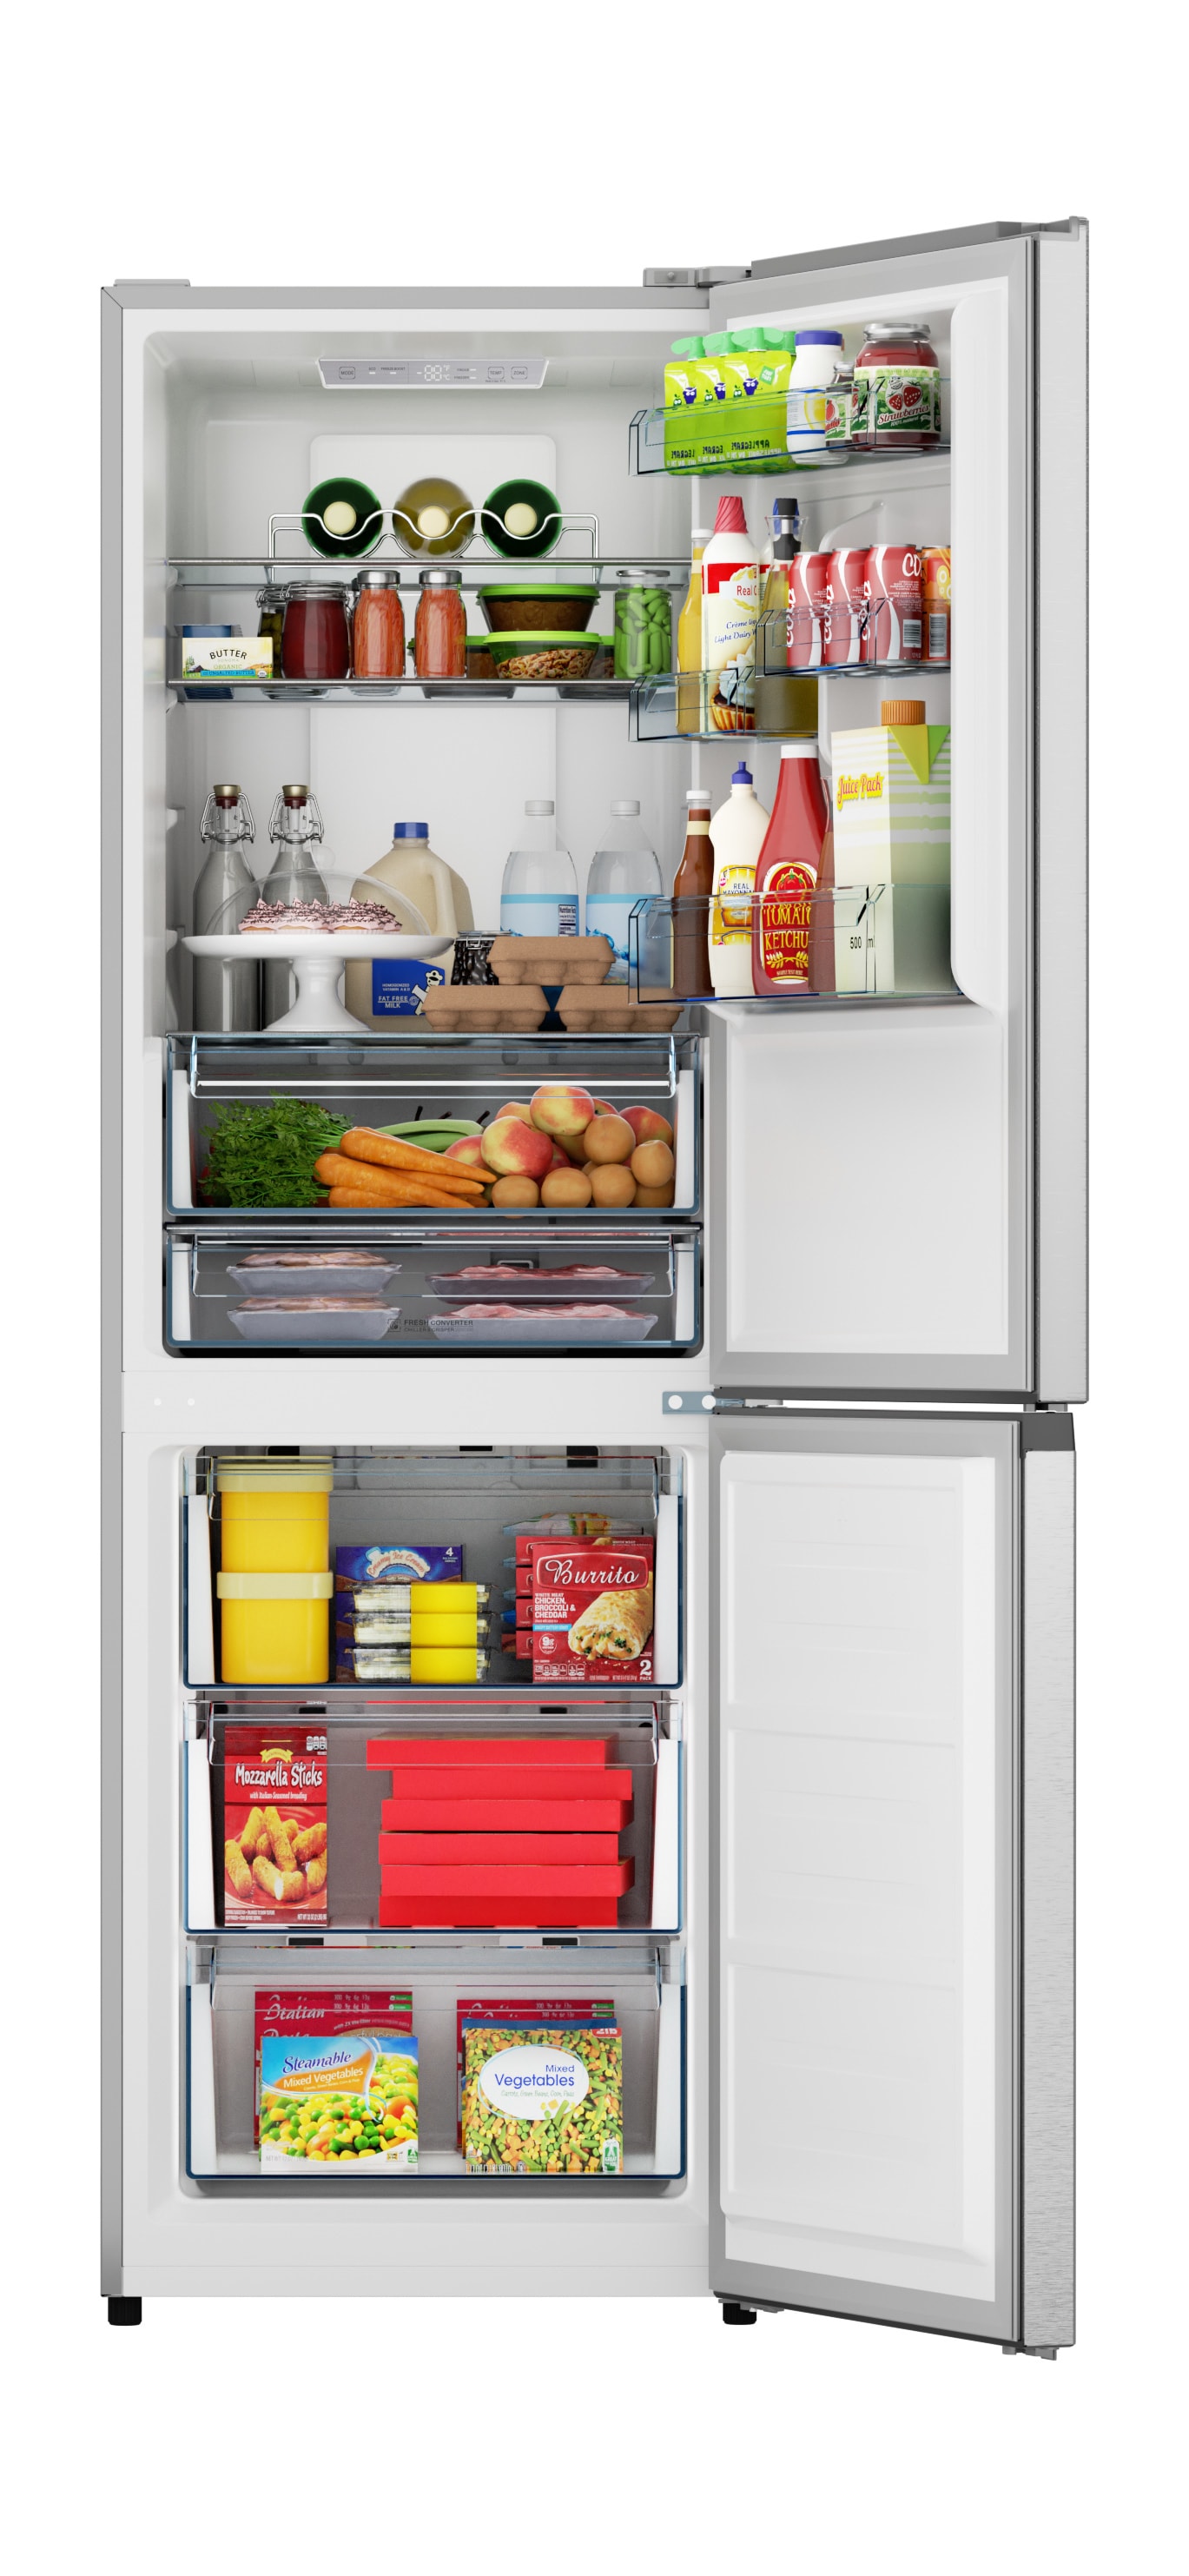 Refrigerator STAR ft Sharp department Refrigerators the 11.5-cu (Stainless in Steel) ENERGY Bottom-Freezer Bottom-Freezer at